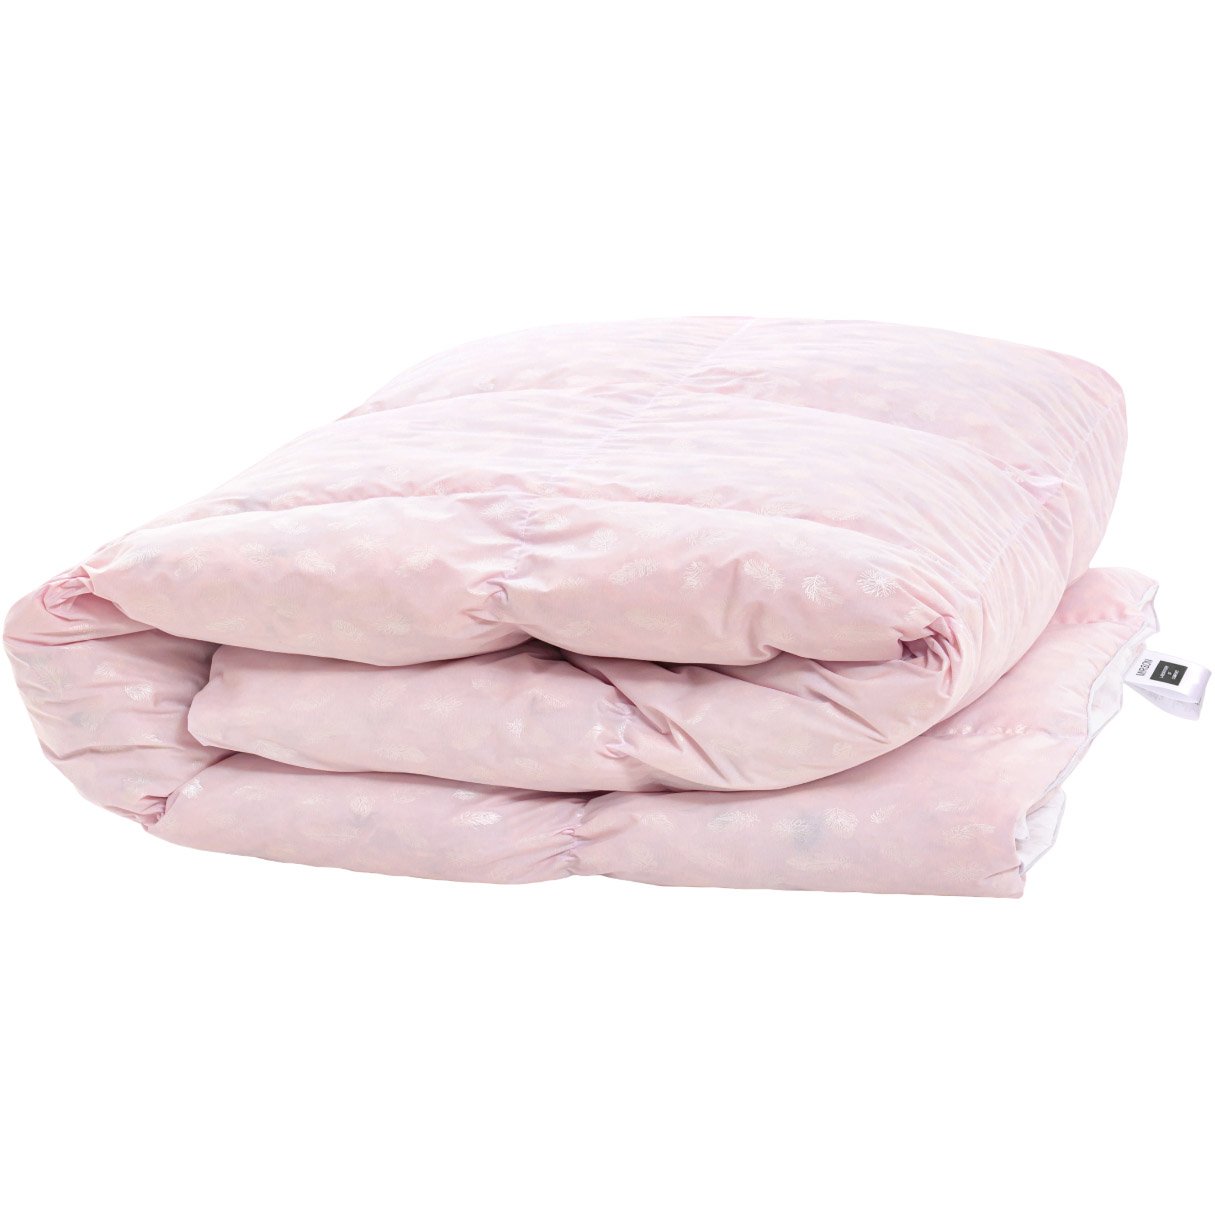 Одеяло пуховое MirSon Karmen №1832 Bio-Pink, 70% пух, полуторное, 215x155, розовое (2200003013108) - фото 1